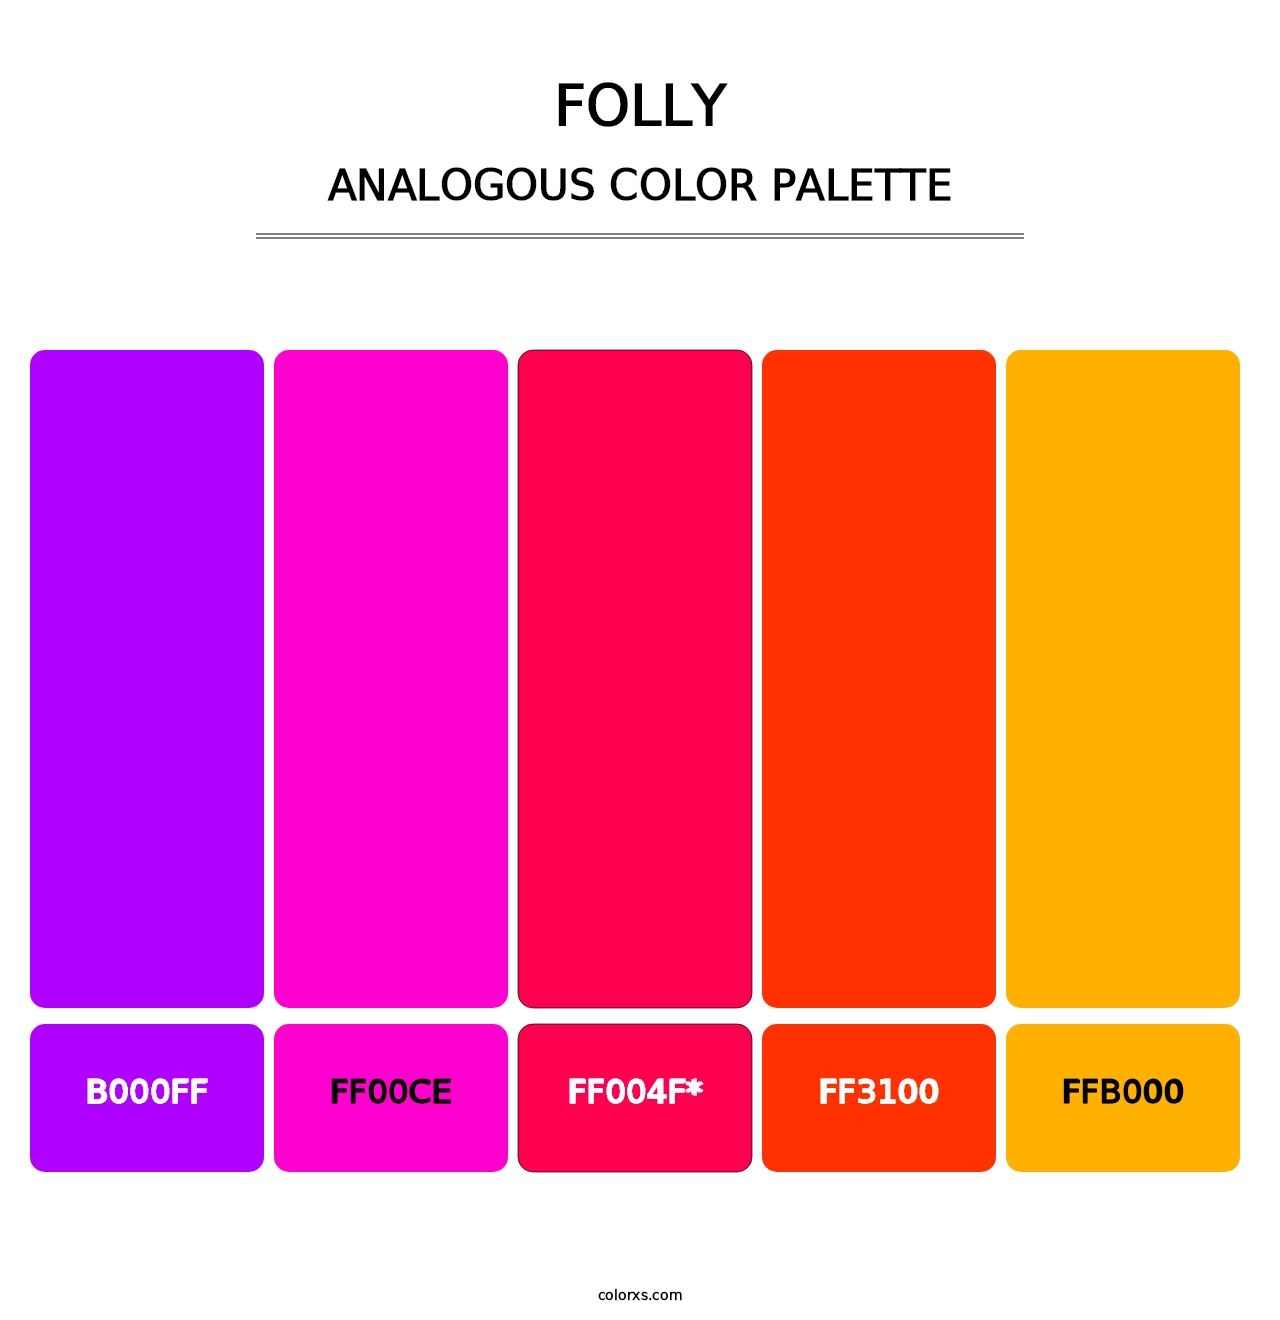 Folly - Analogous Color Palette